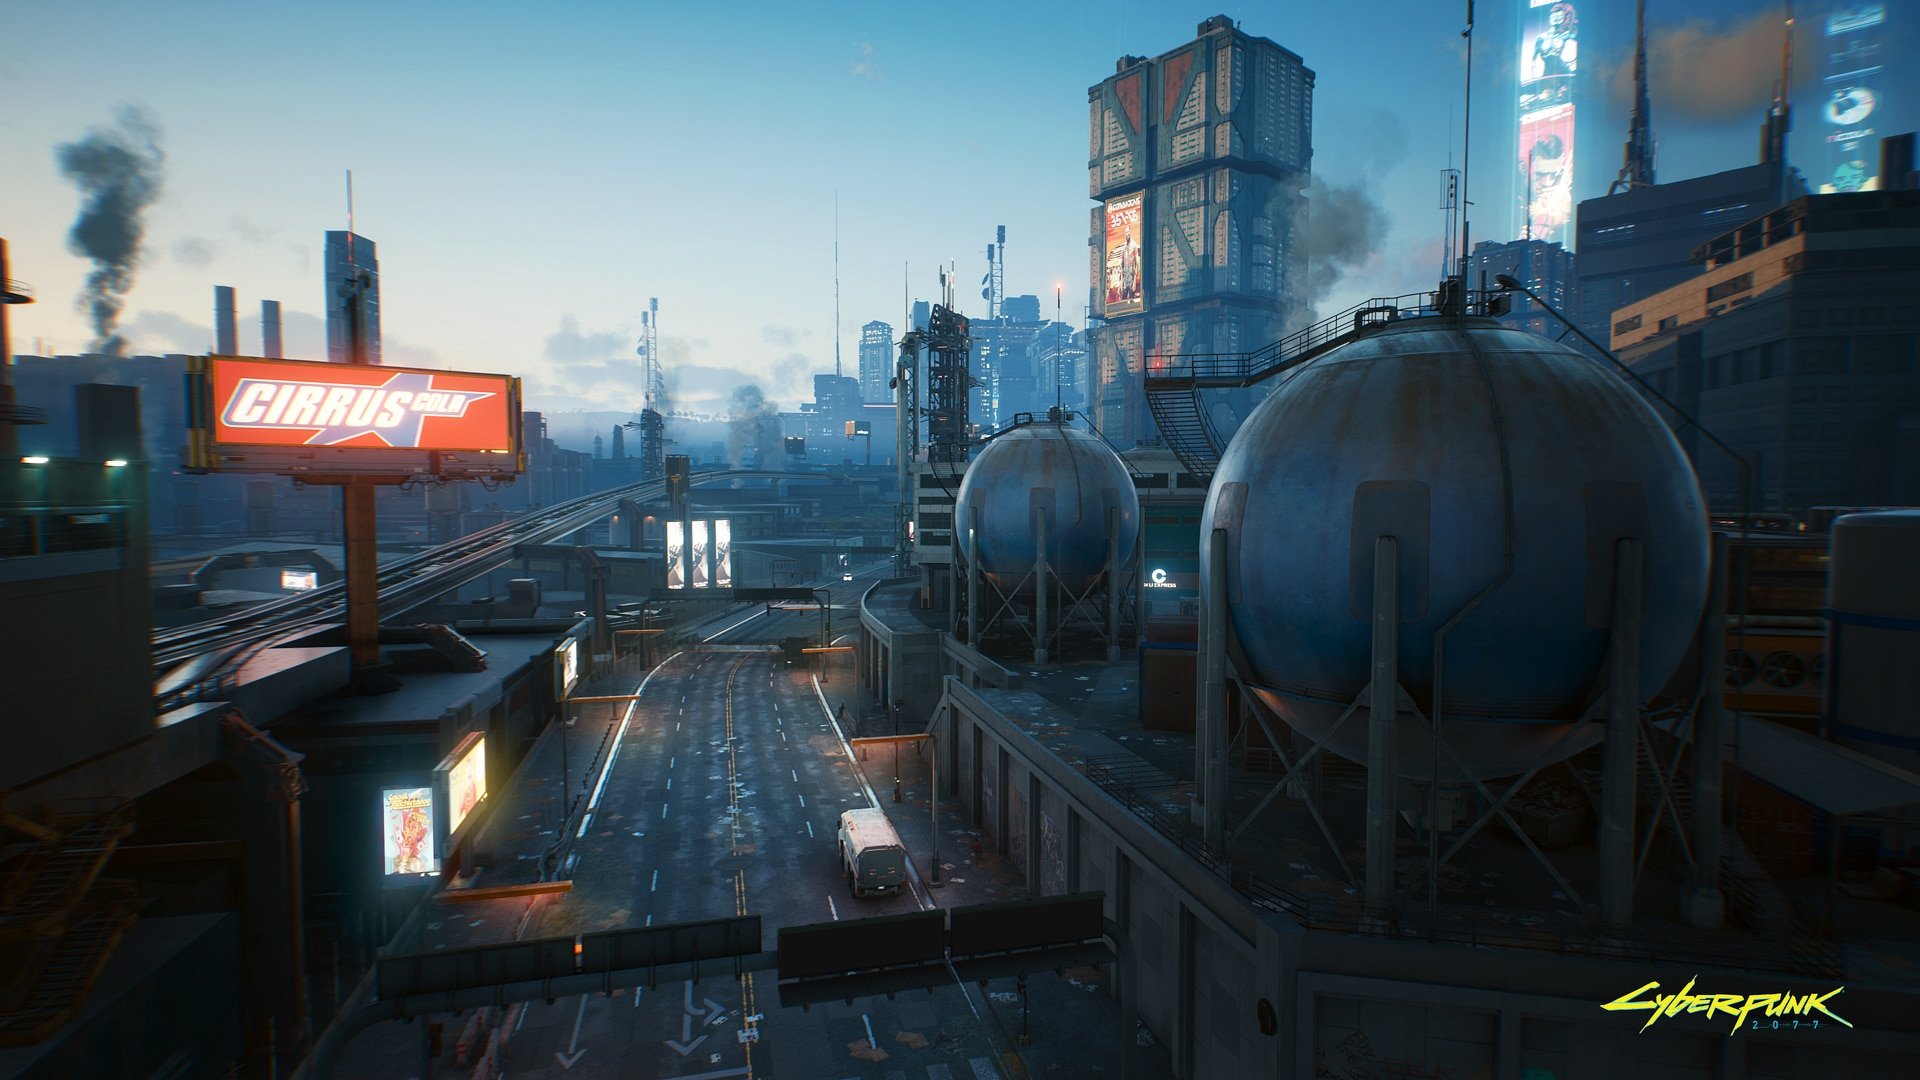 Naughty Dog divulga nova cena de Uncharted 4 - NerdBunker